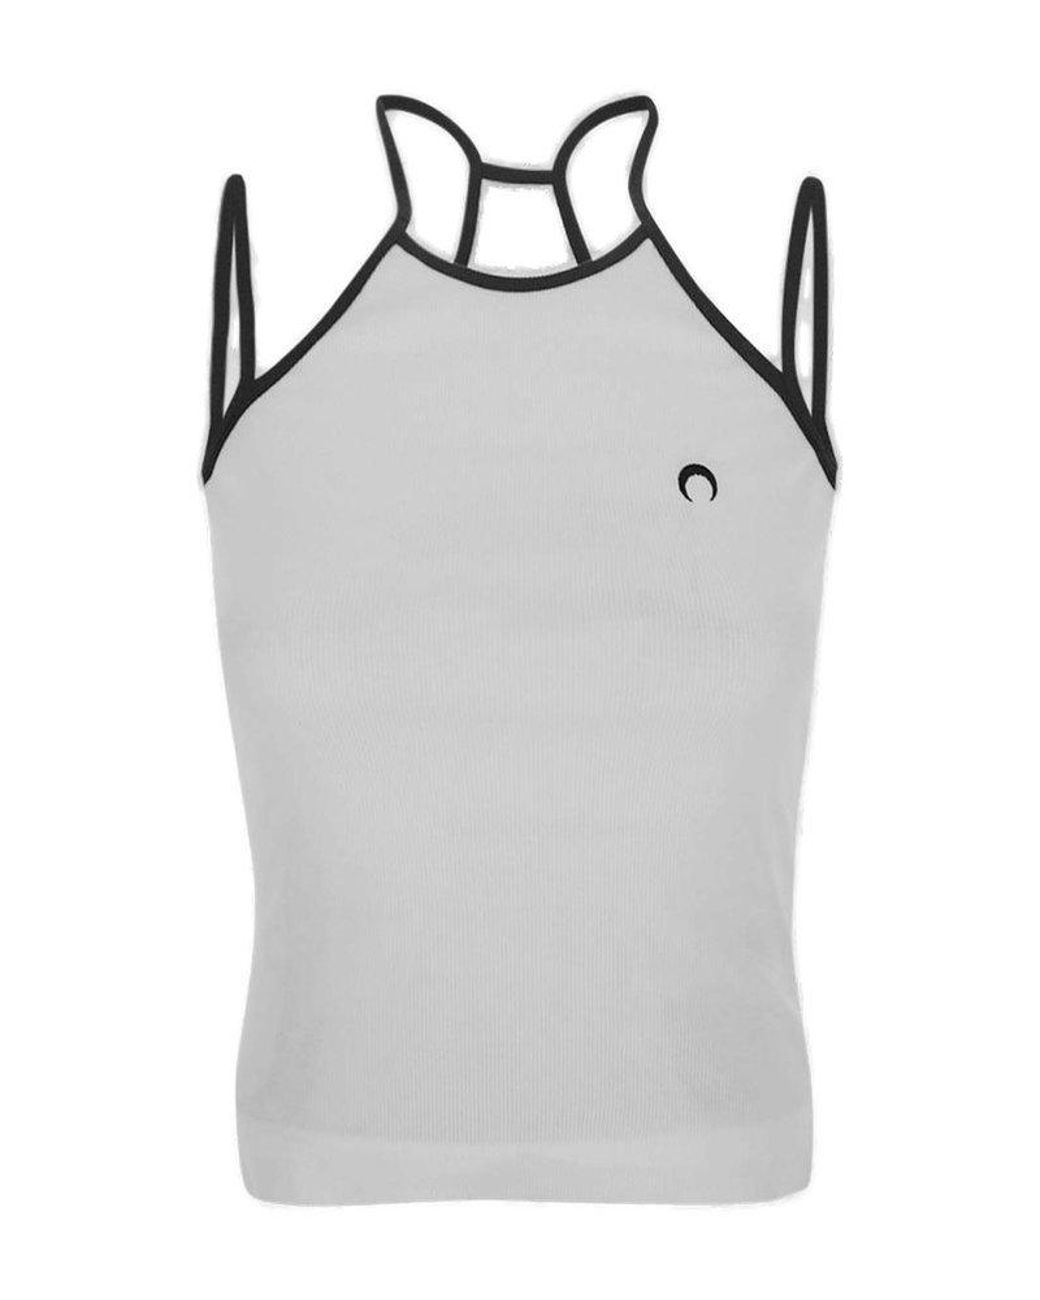 Marine Serre Crescent Moon Sleeveless Tennis Top in Gray | Lyst